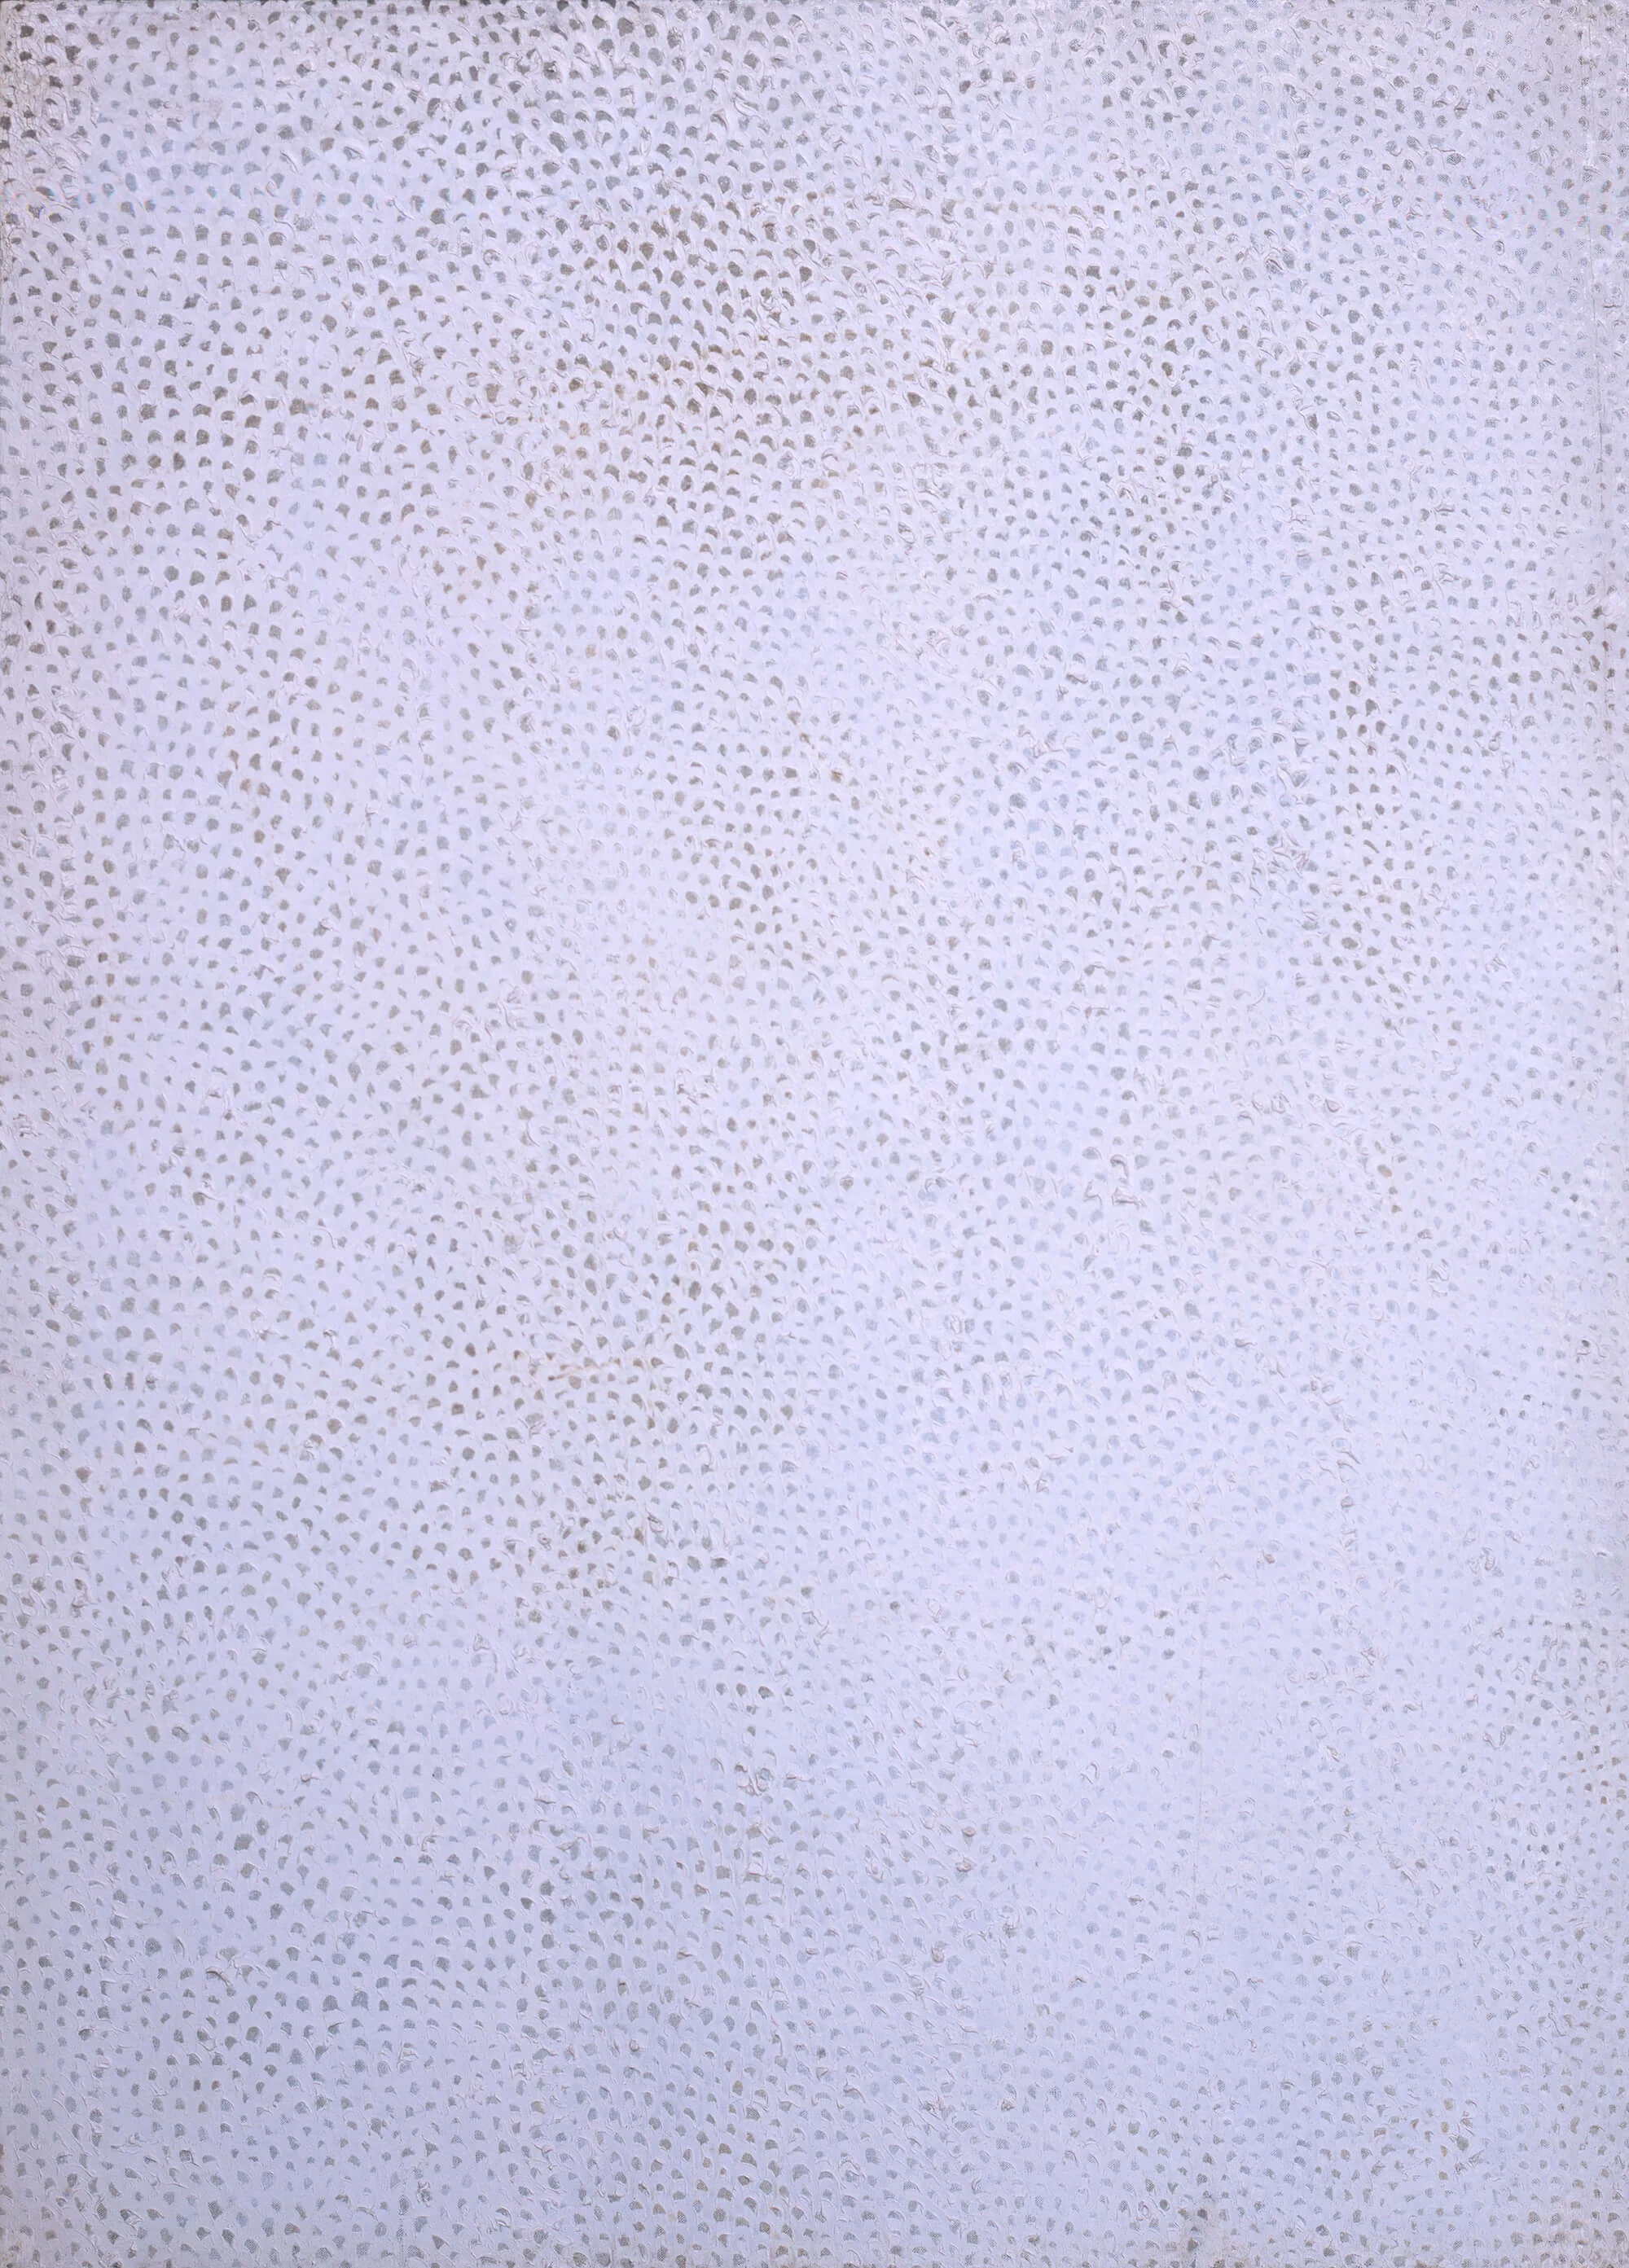 Infinity Nets (2), 1958. Oil on canvas 125.2 x 91 cm. Copyright Yayoi Kusama